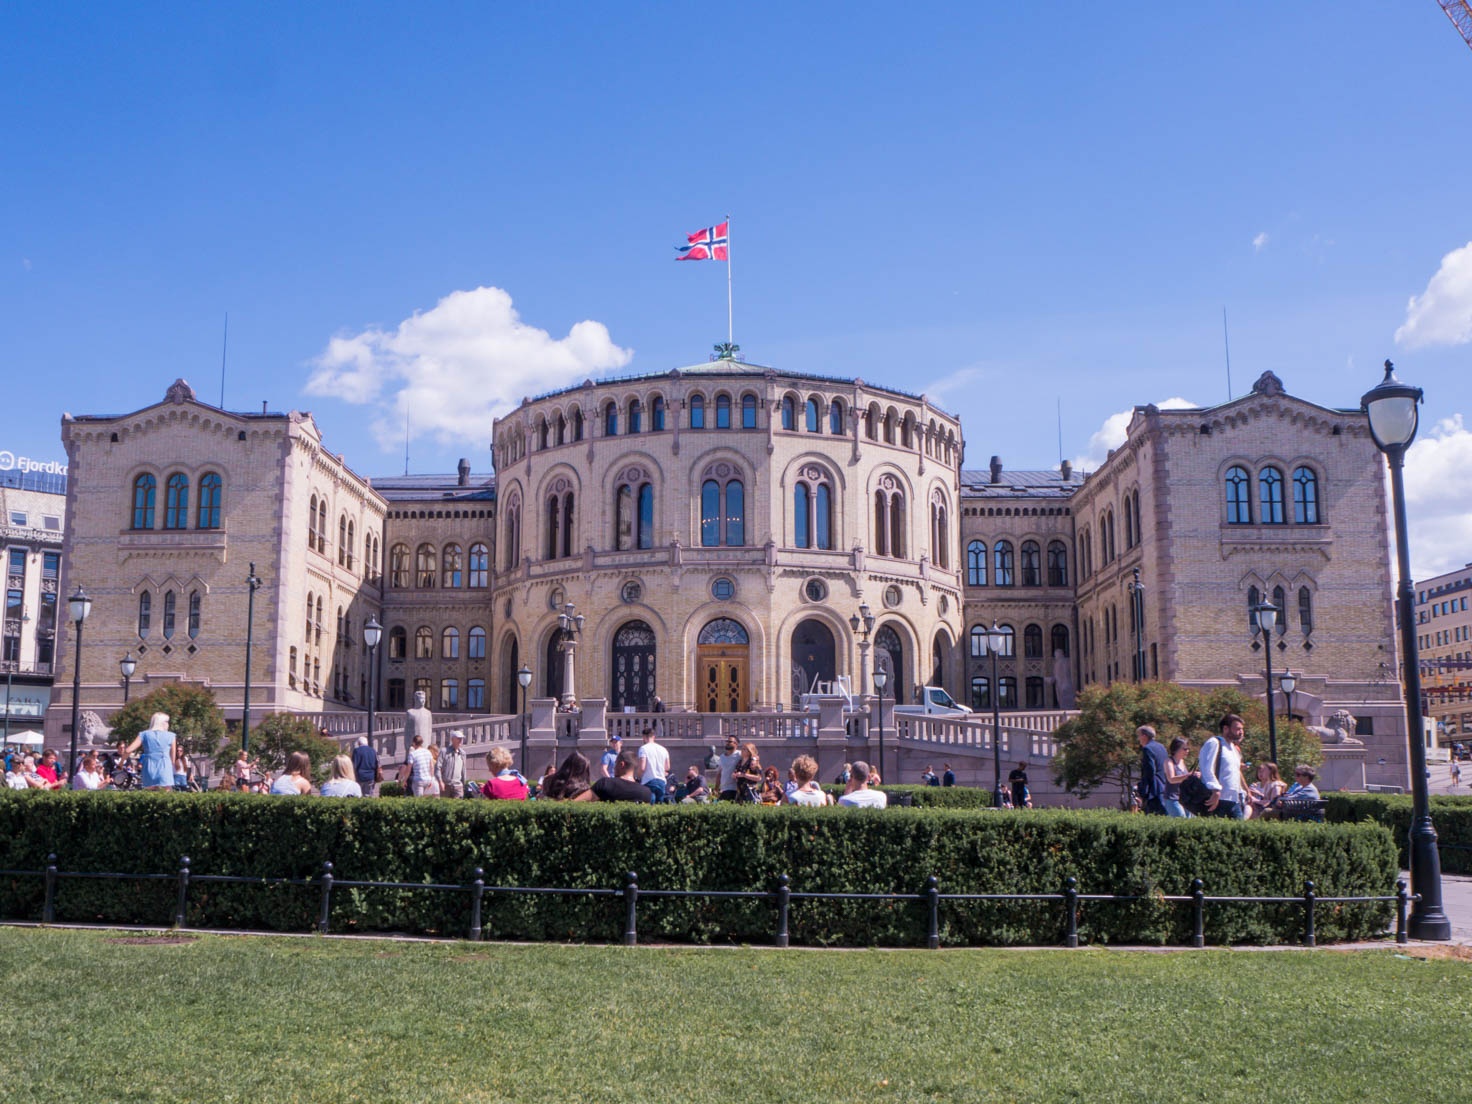 Parliament building in Oslo, Norway